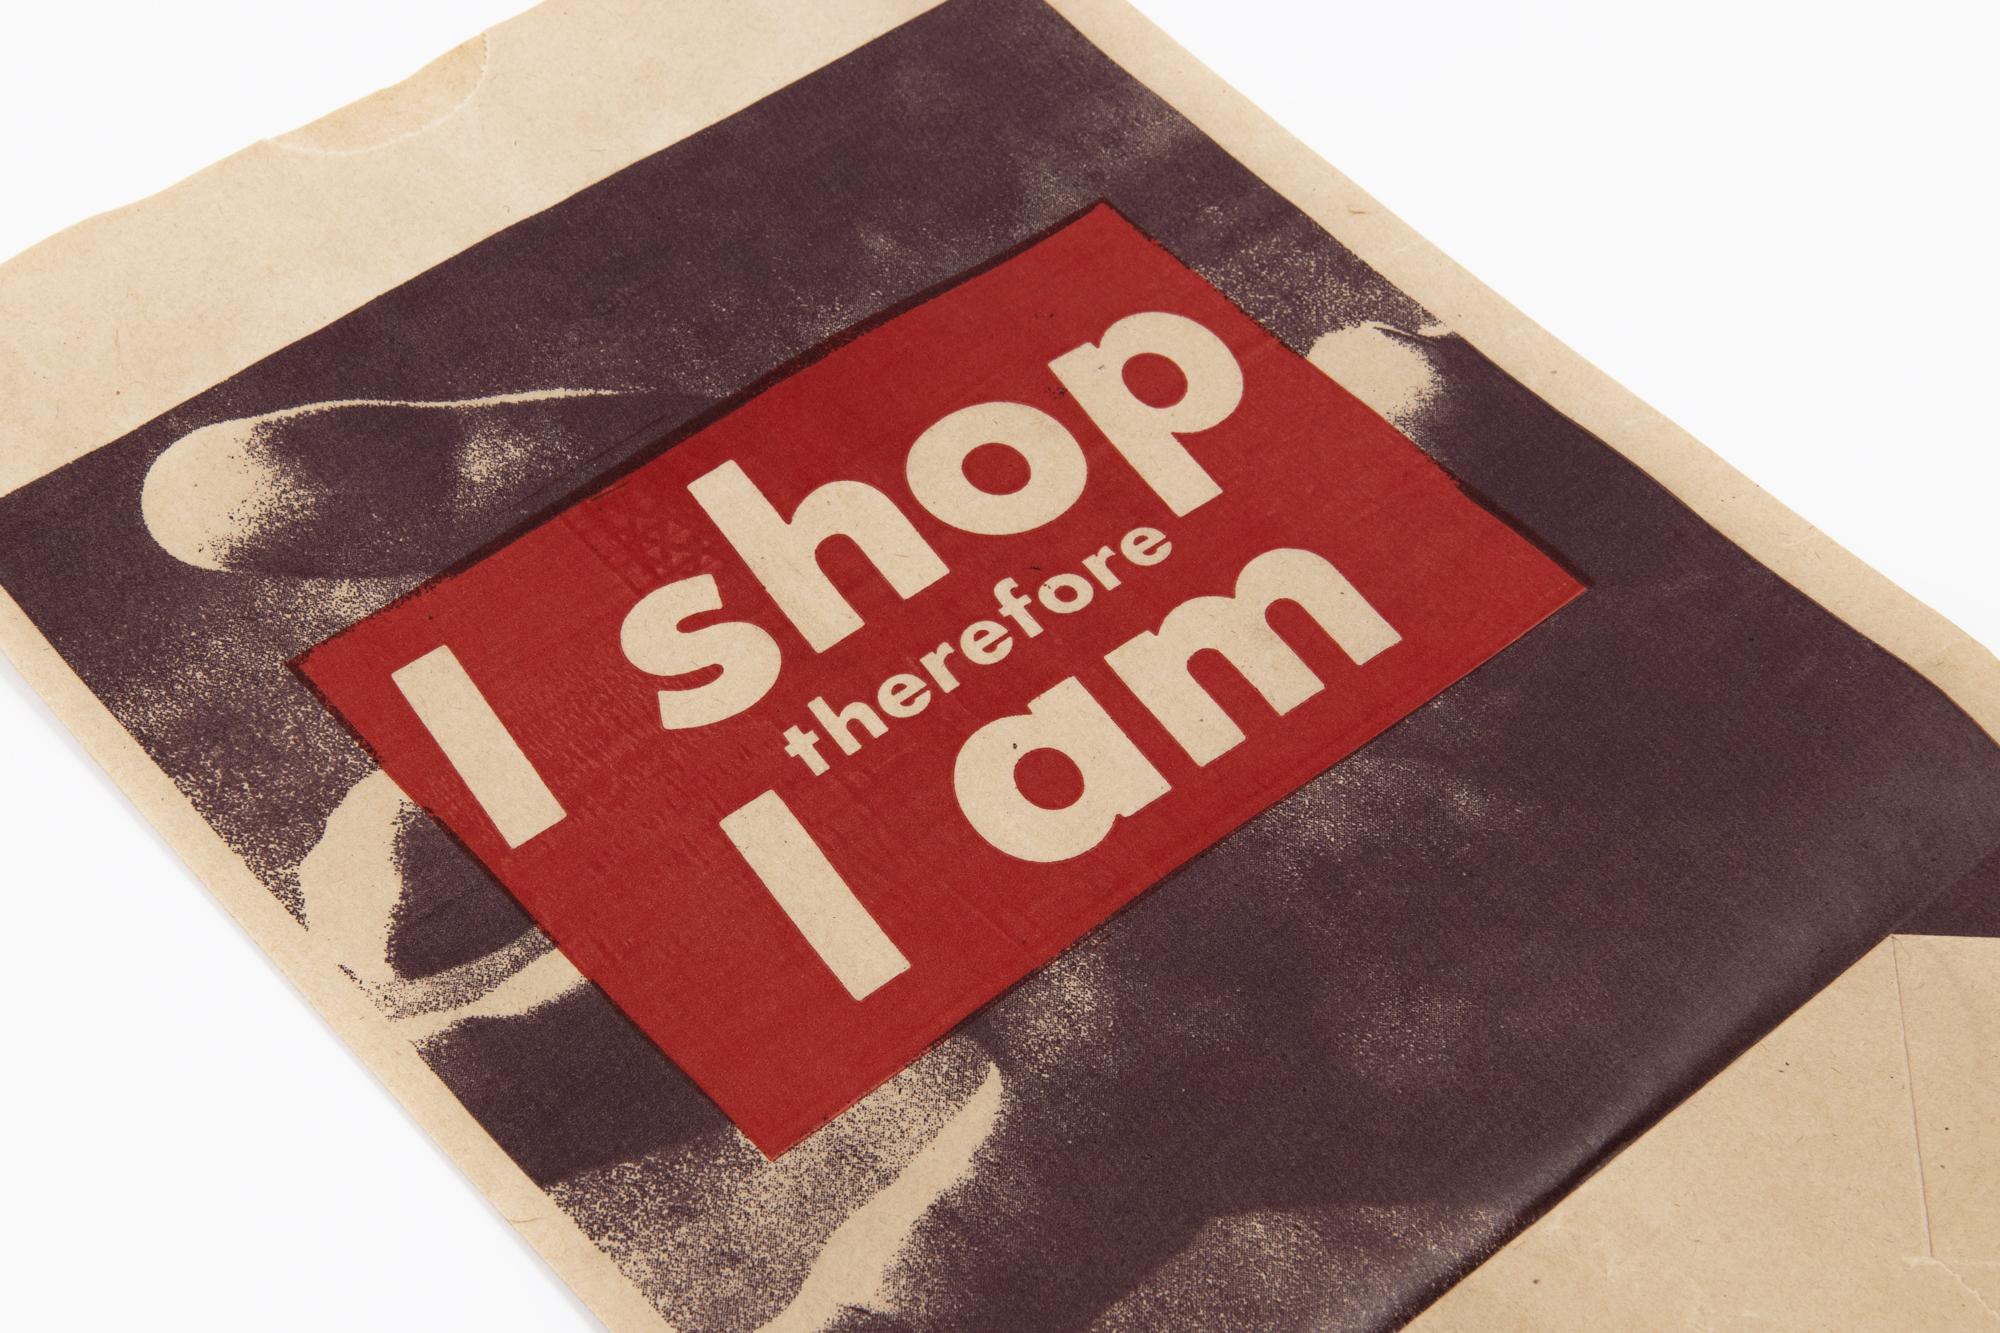 Barbara Kruger (1945, American)
I Shop Therefore I Am, 1990
Medium: Photolithograph on paper shopping bag
Edition size: 9000
Dimensions: 17 5/16 x 10 3/4 in (43.9 x 27.3 cm)
Publisher: Kölnischer Kunstverein, Cologne
Printer: Zechel & Co. GmbH,